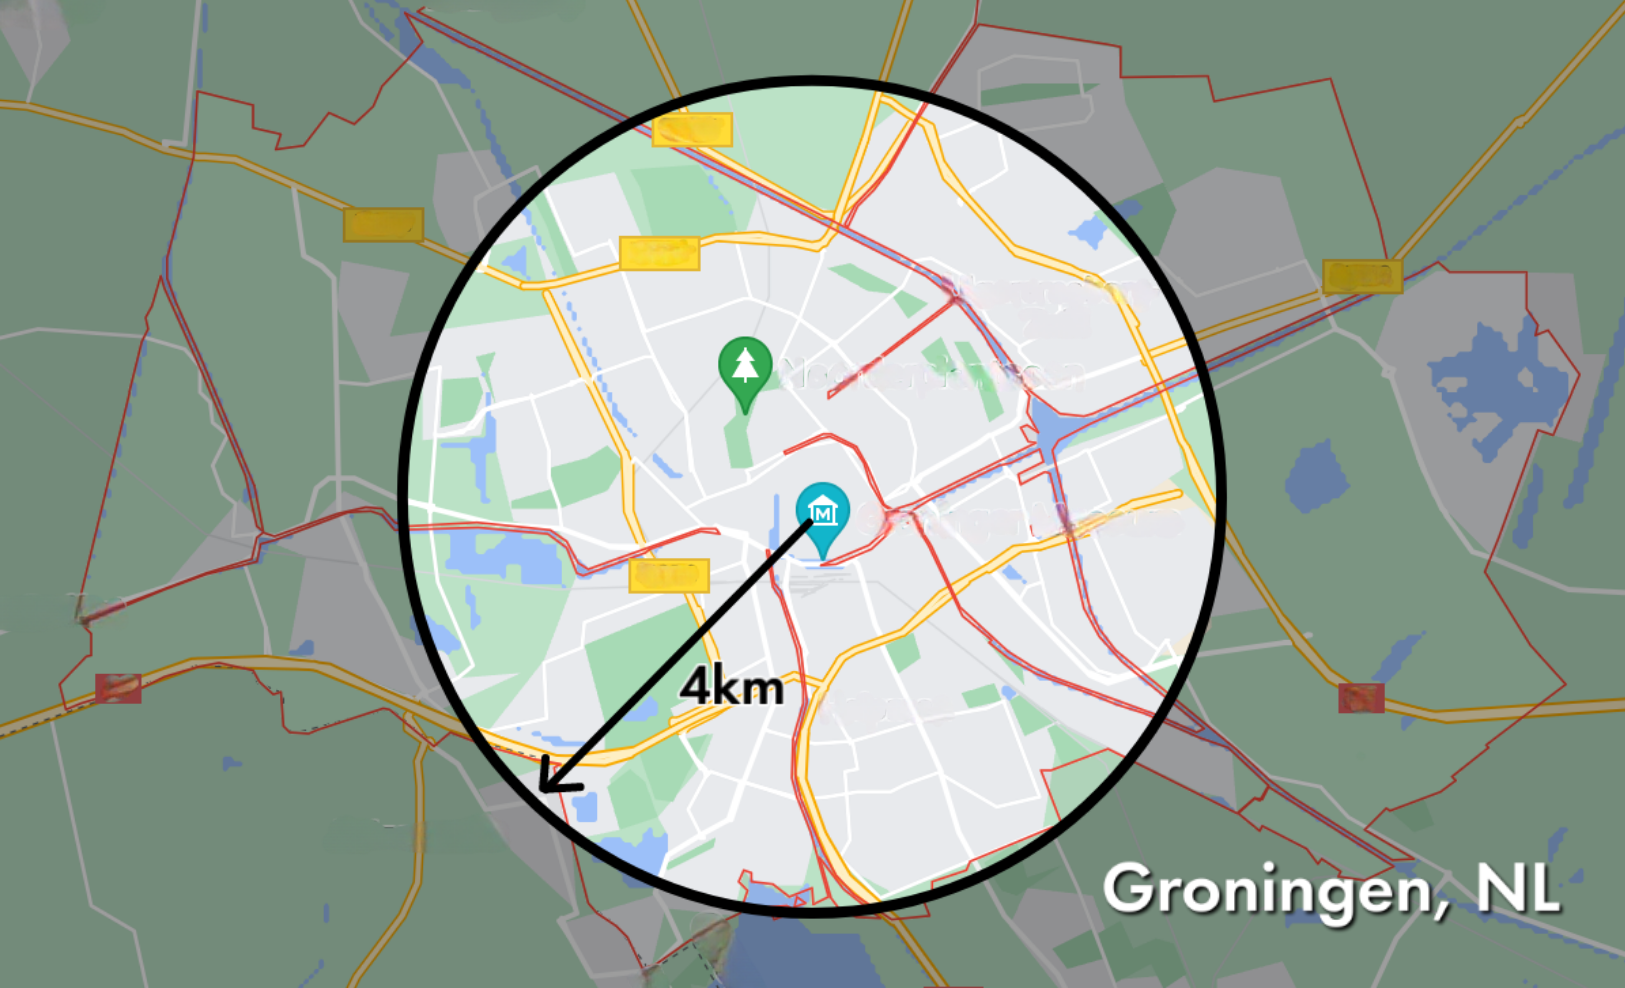 Map of Groningen, radius is 4km